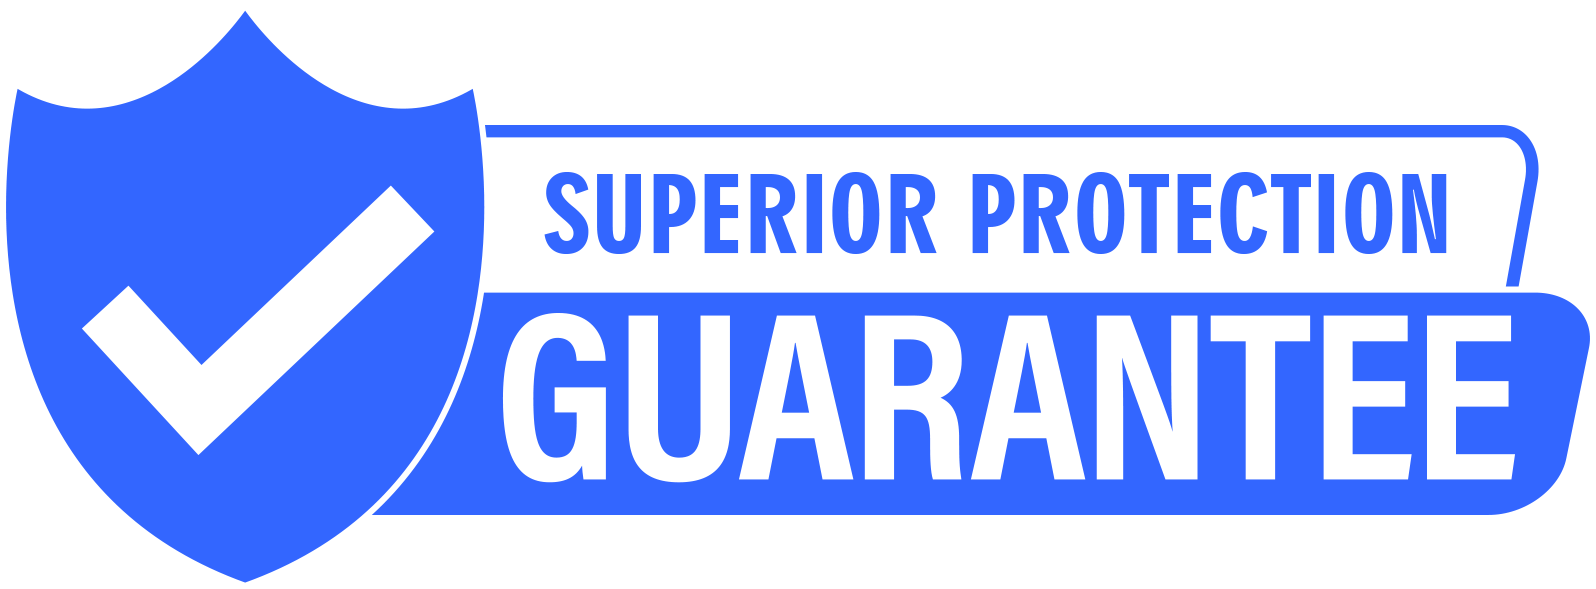 Superior Protection Guarantee Badge